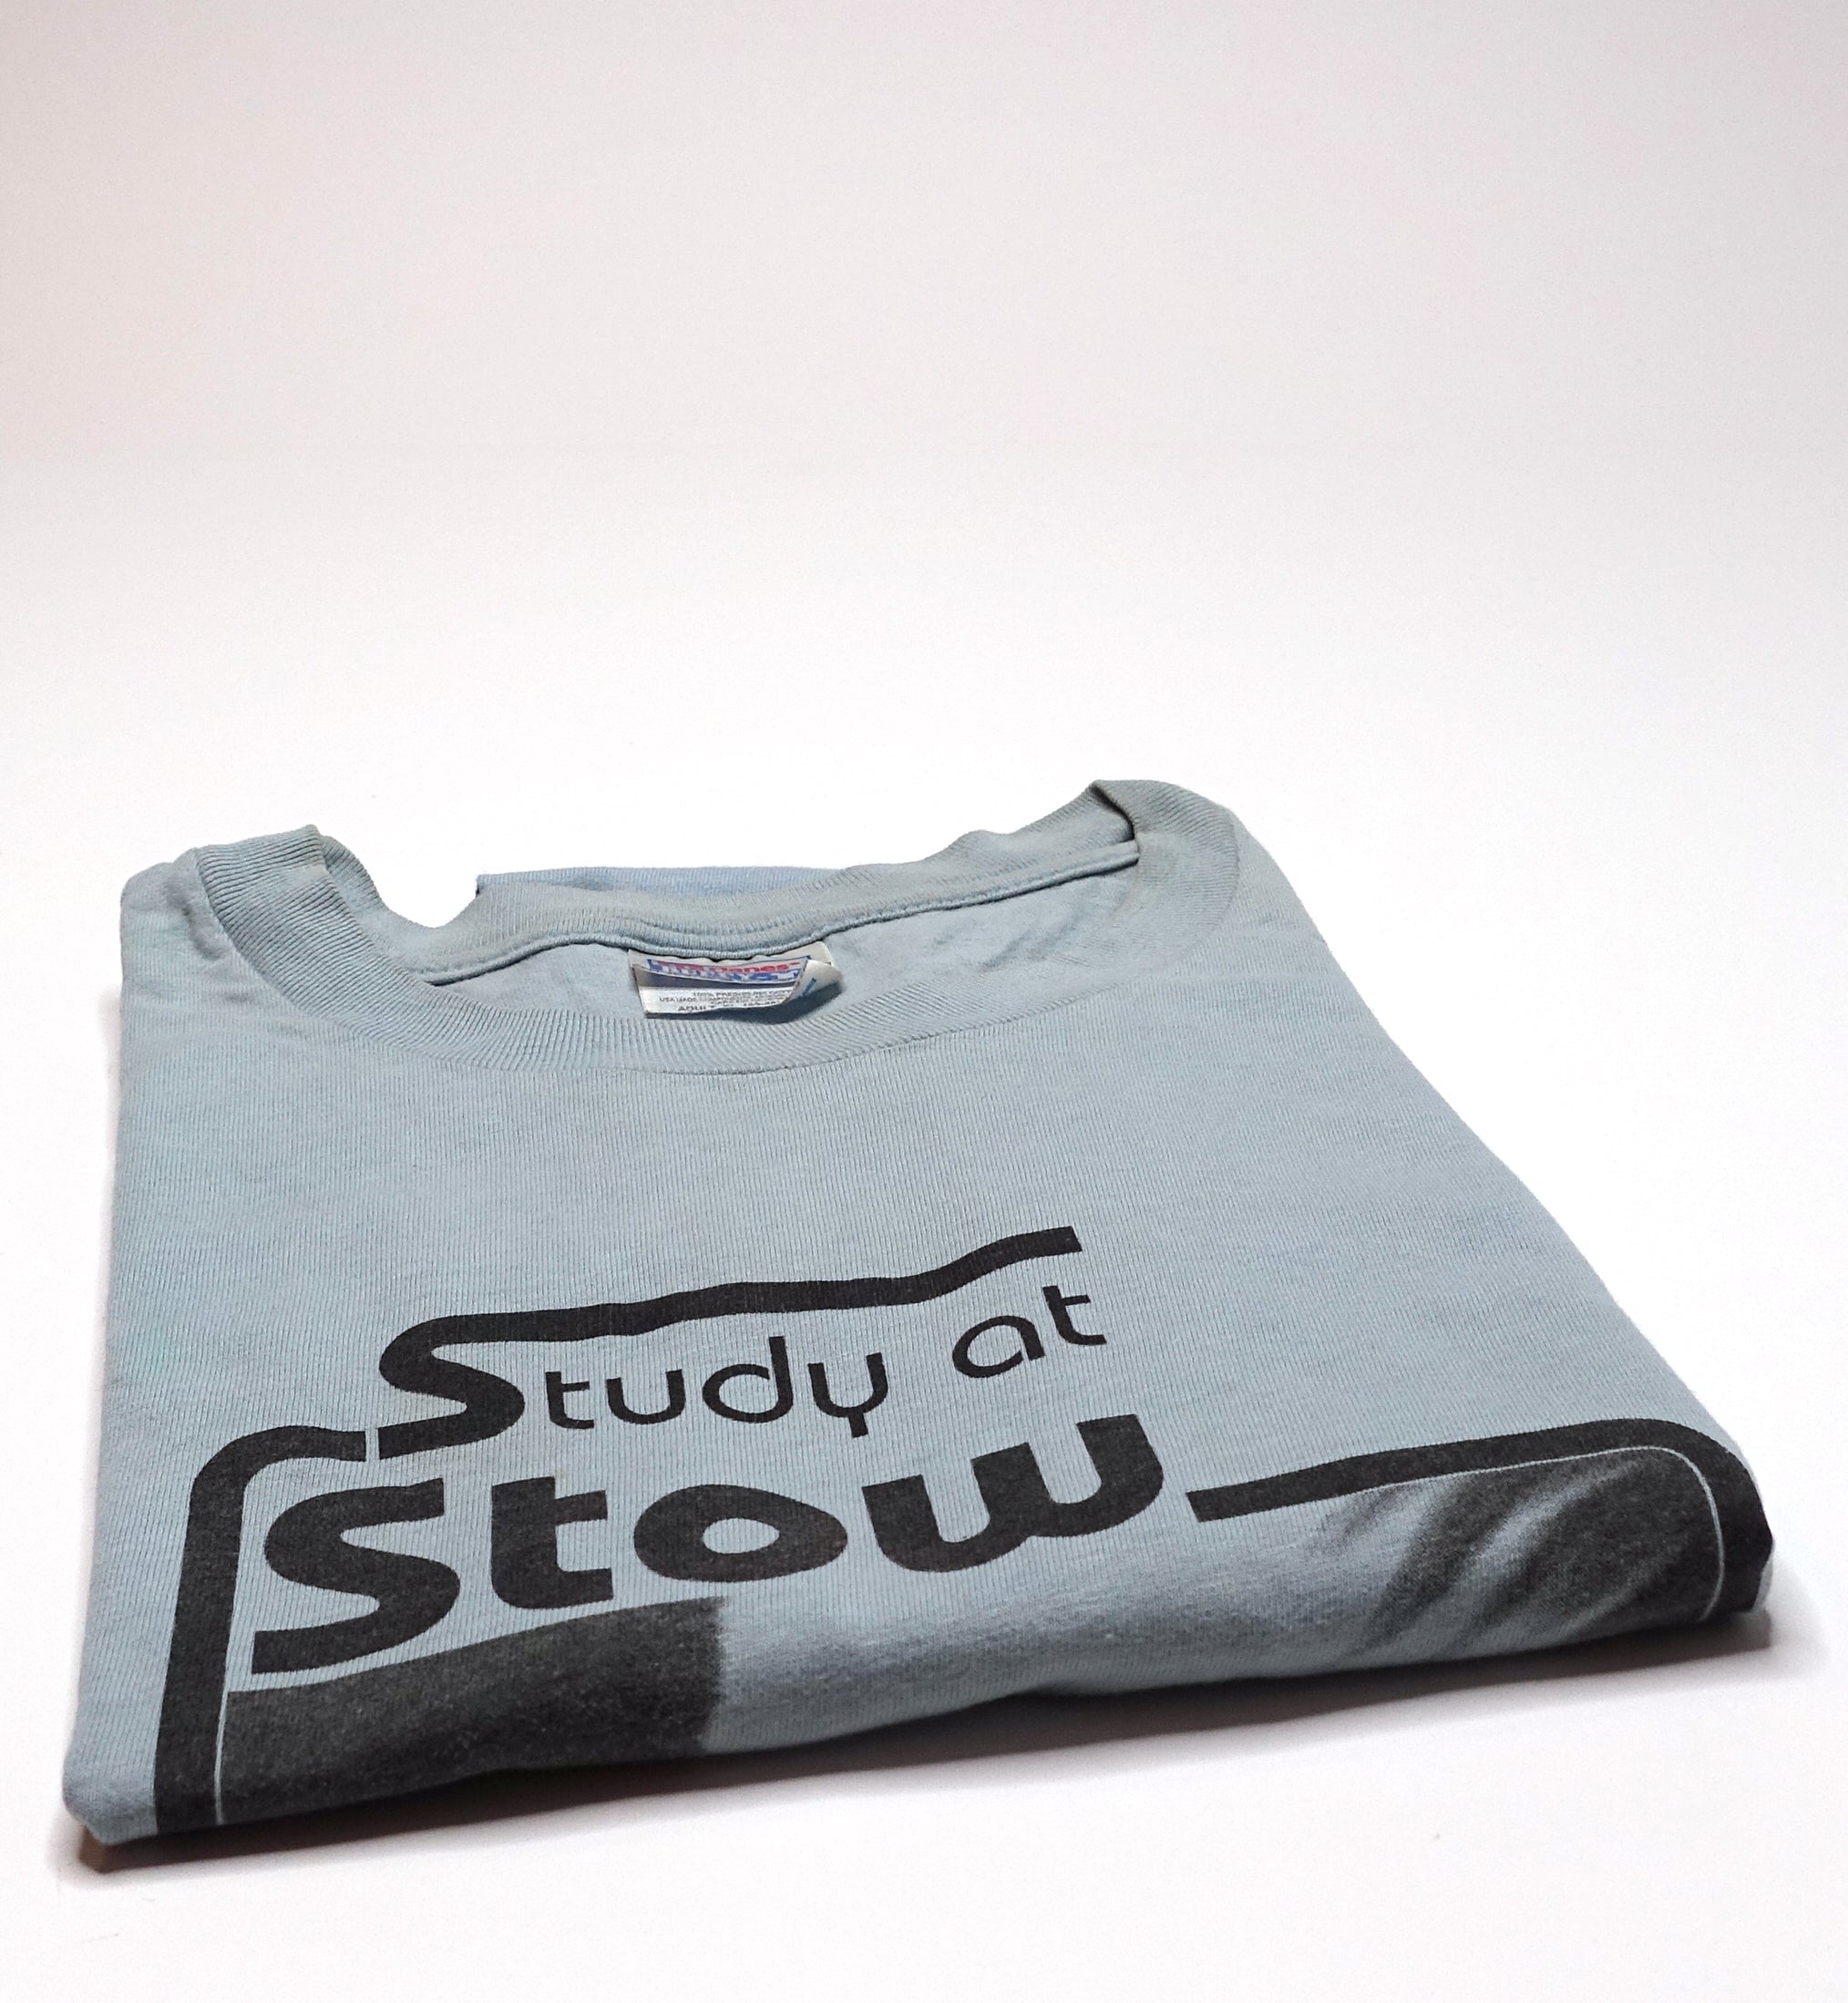 Belle & Sebastian - Study At Stow Tour Shirt Size XL